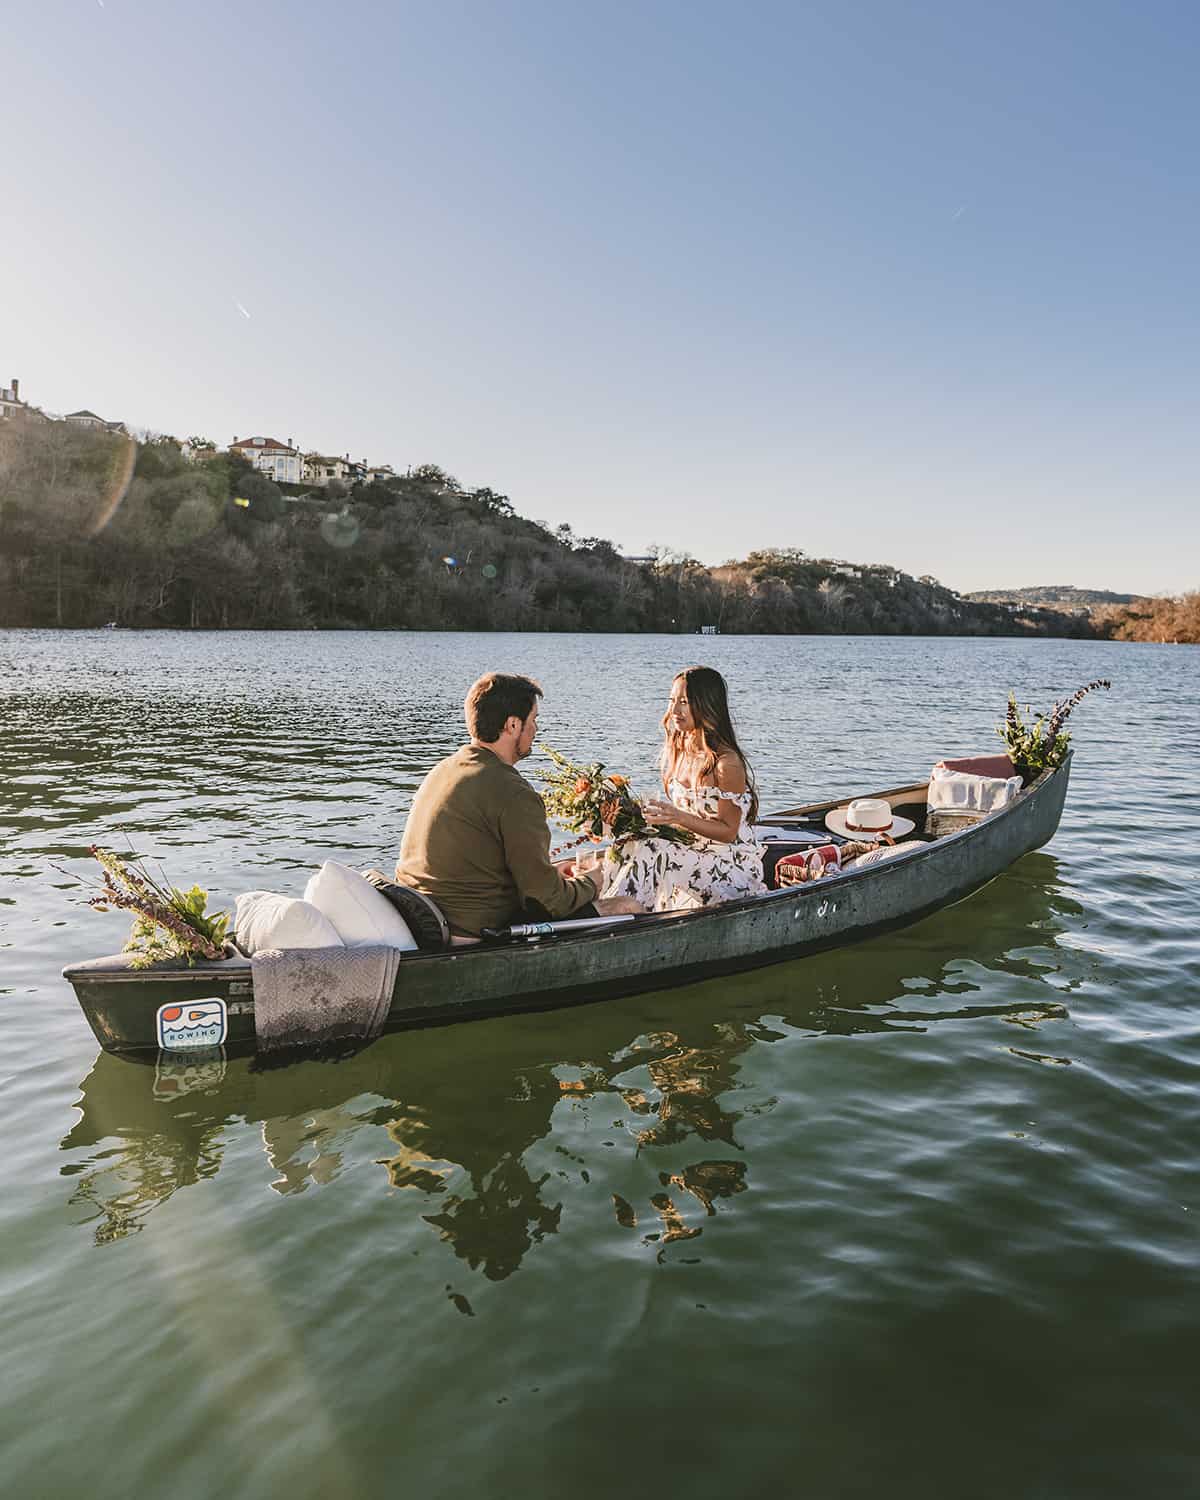 Canoe on Lady Bird Lake in Austin Texas